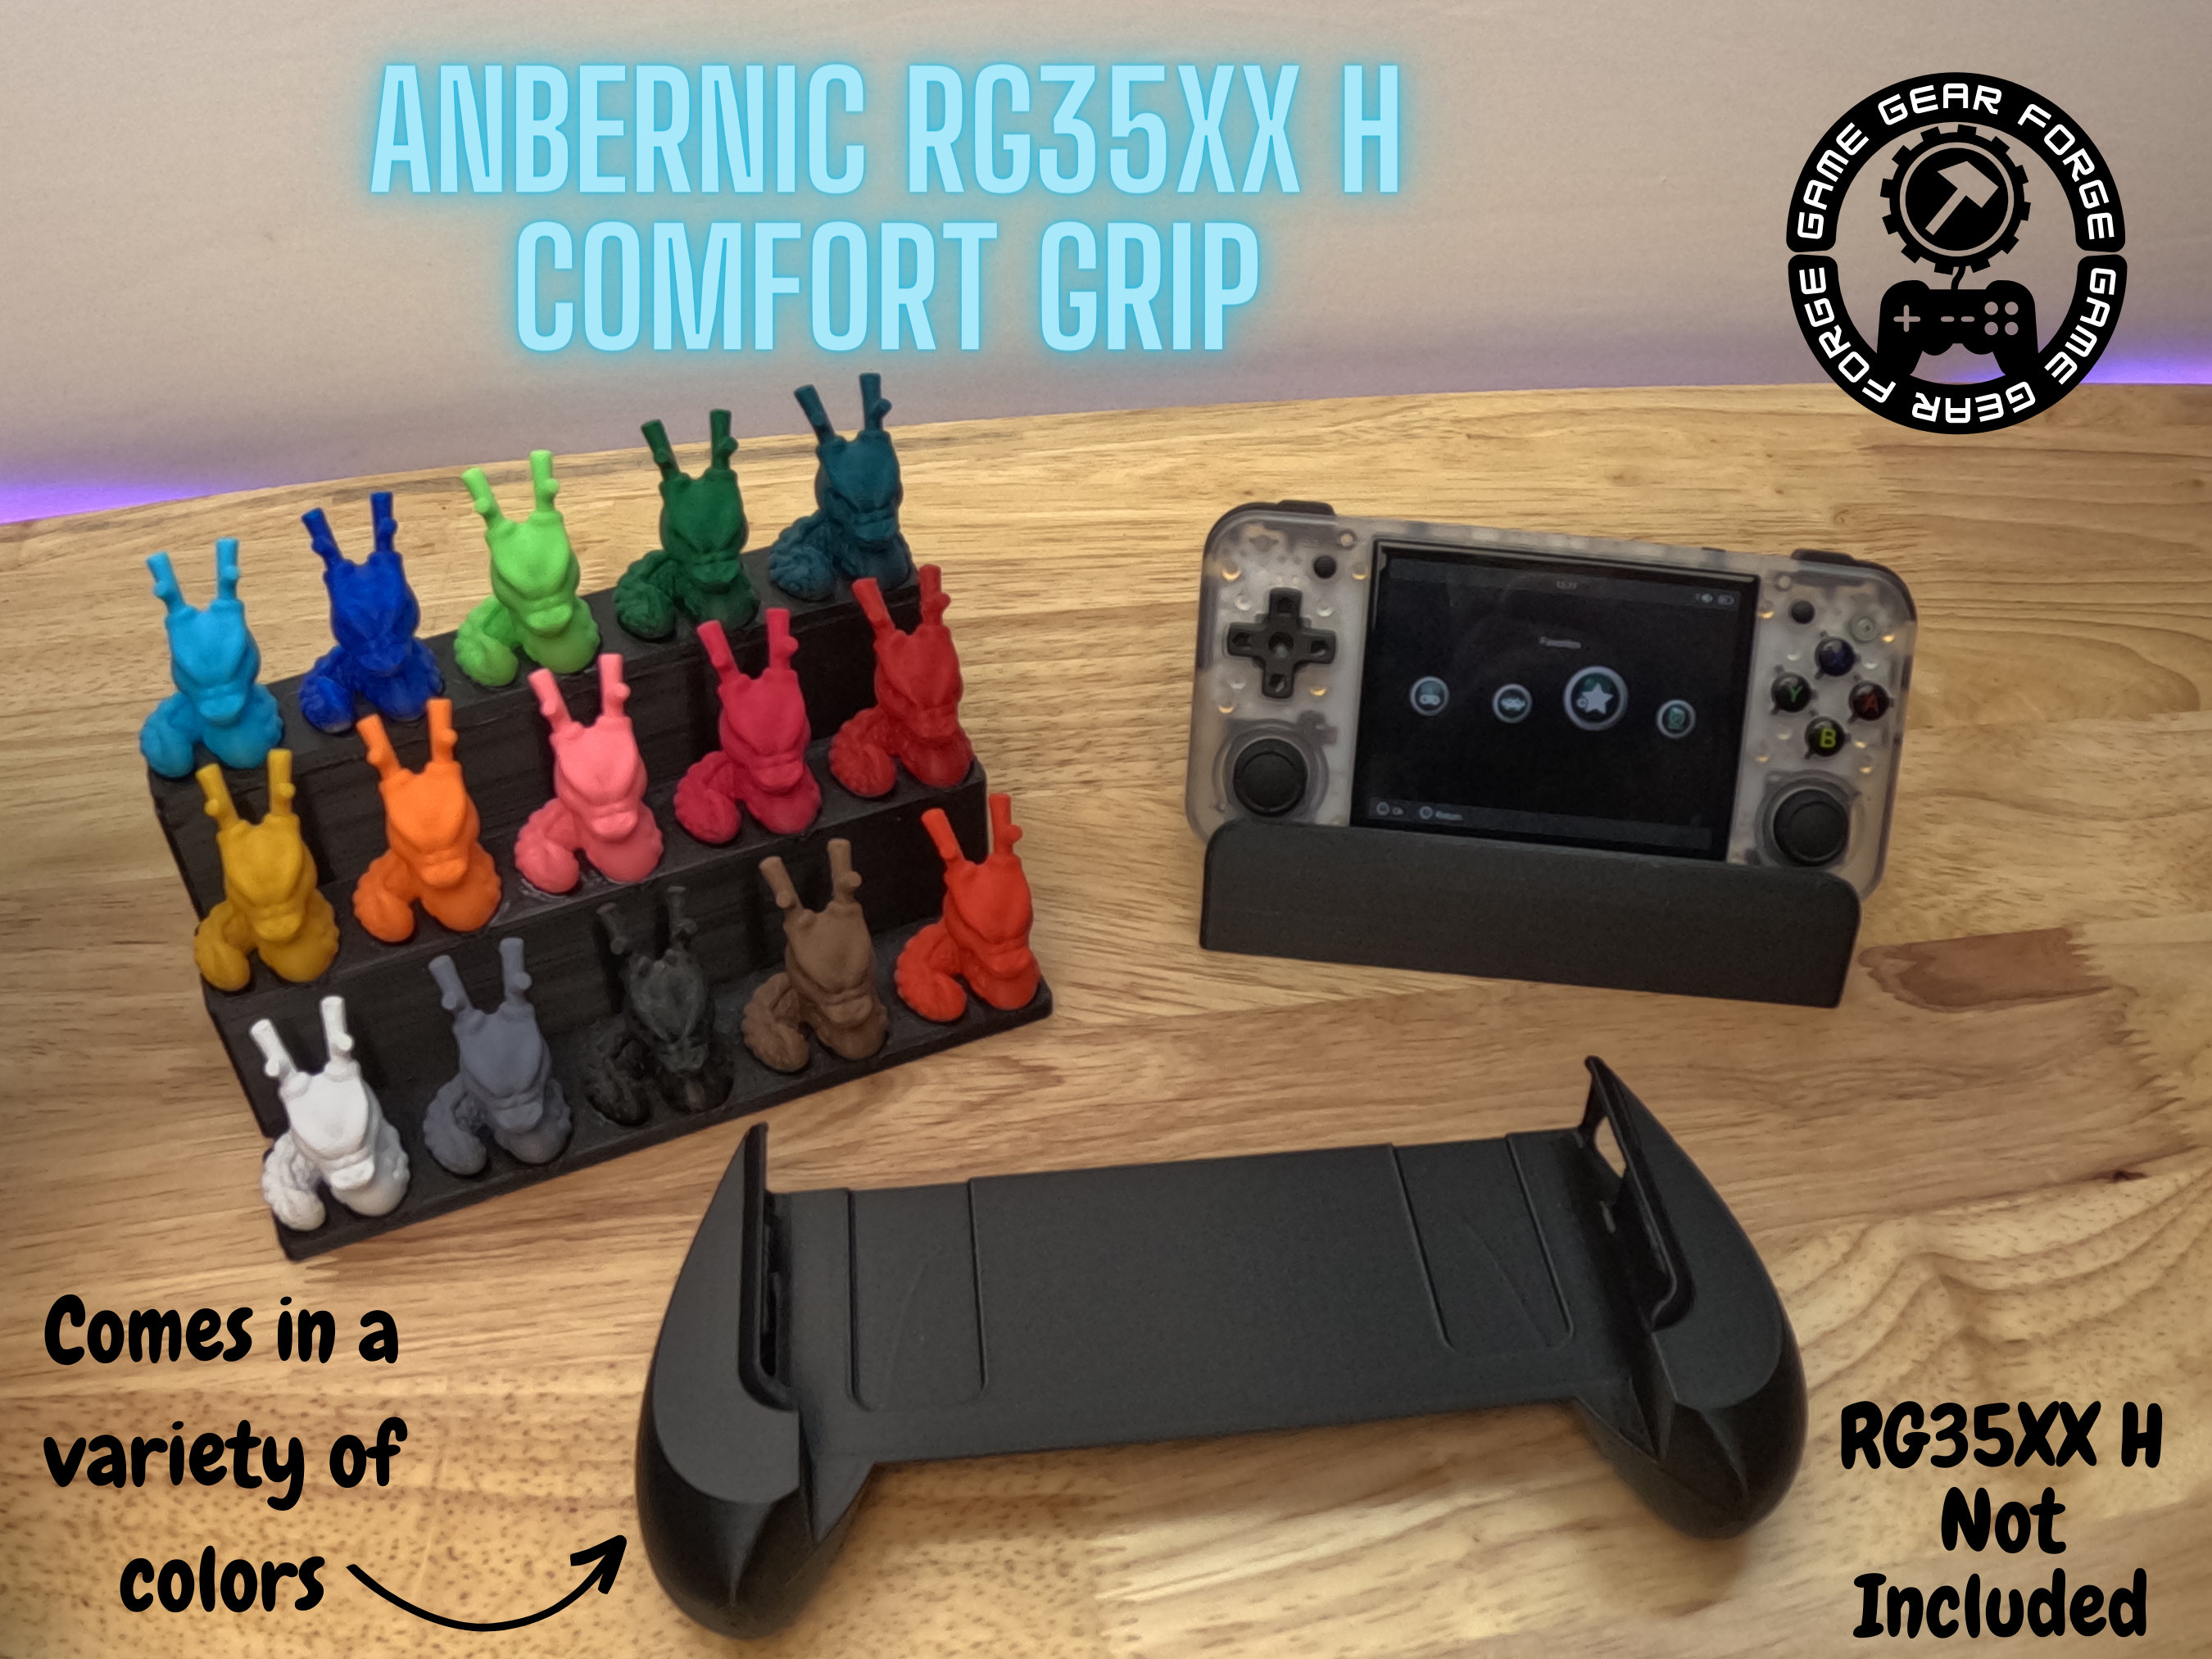 Anbernic RG35XX H Comfort Grip 